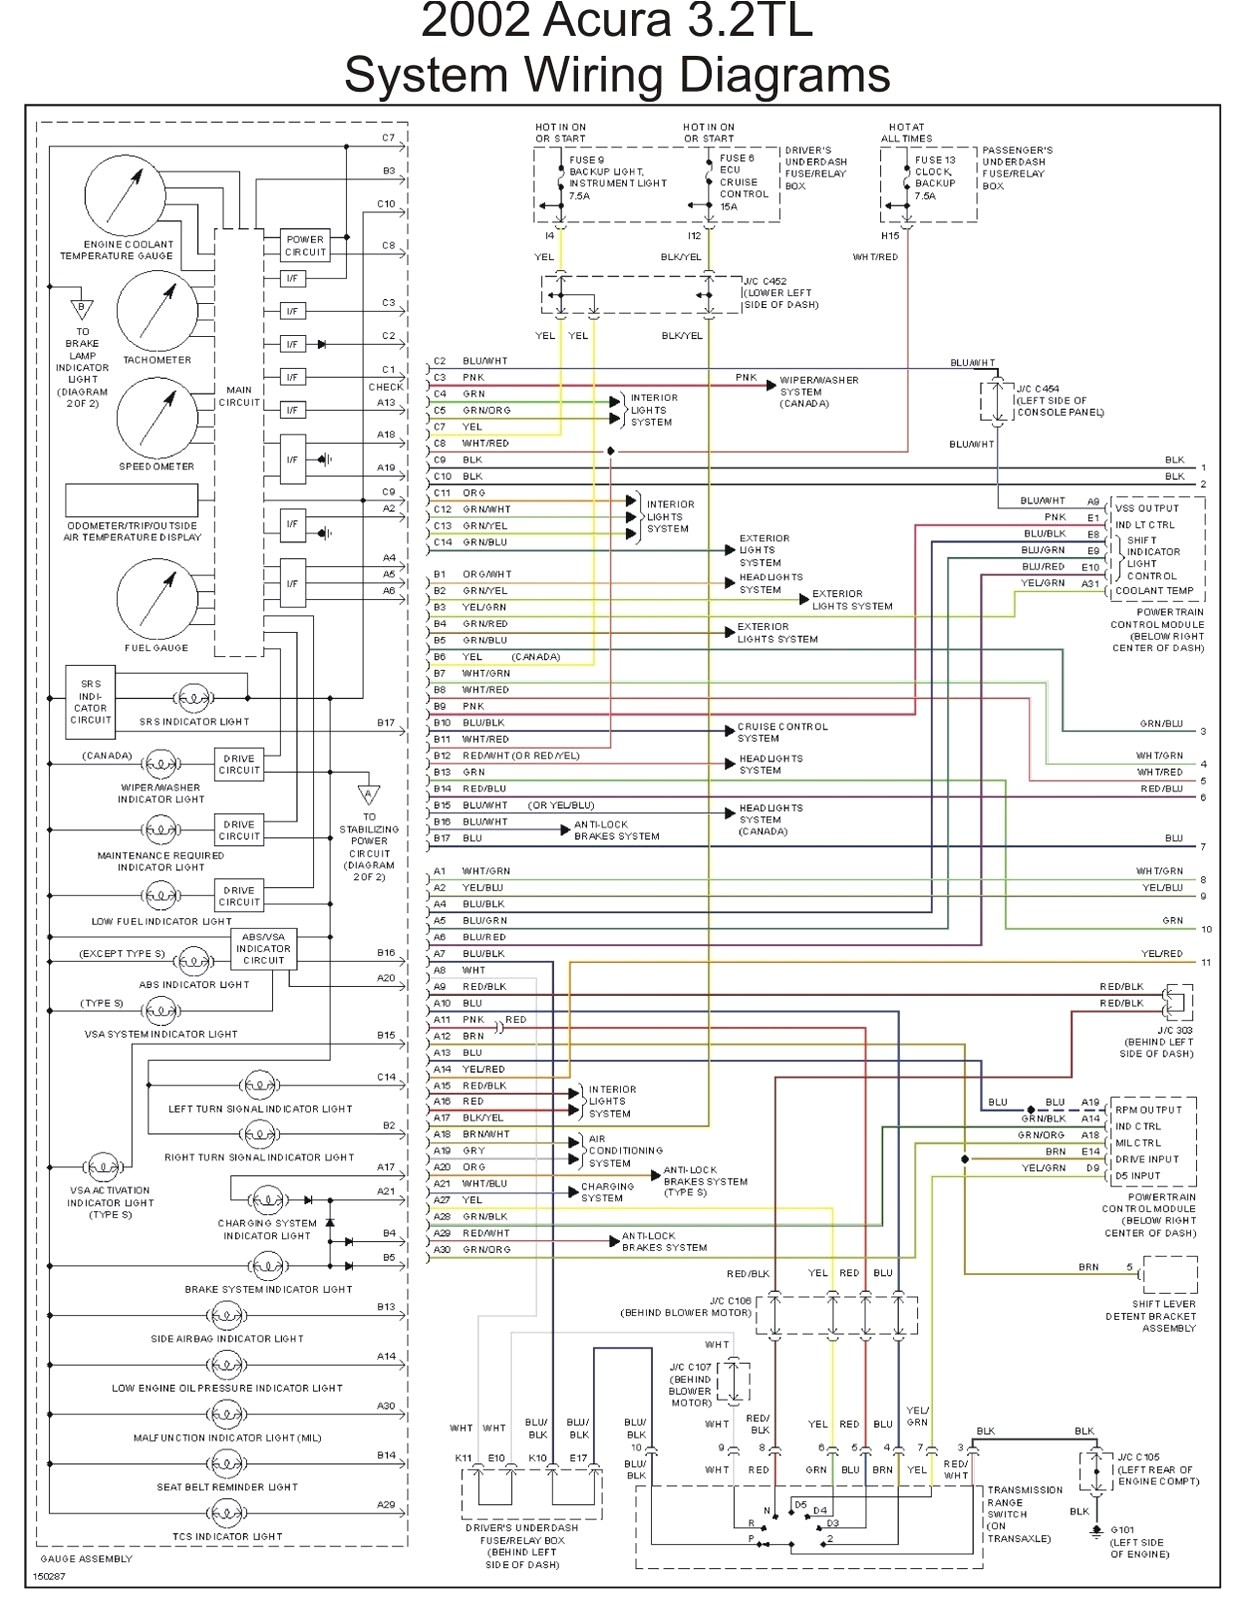 2000 isuzu rodeo radio wiring diagram book of 1995 acura integra radio wiring diagram free wiring diagrams of 2000 isuzu rodeo radio wiring diagram jpg